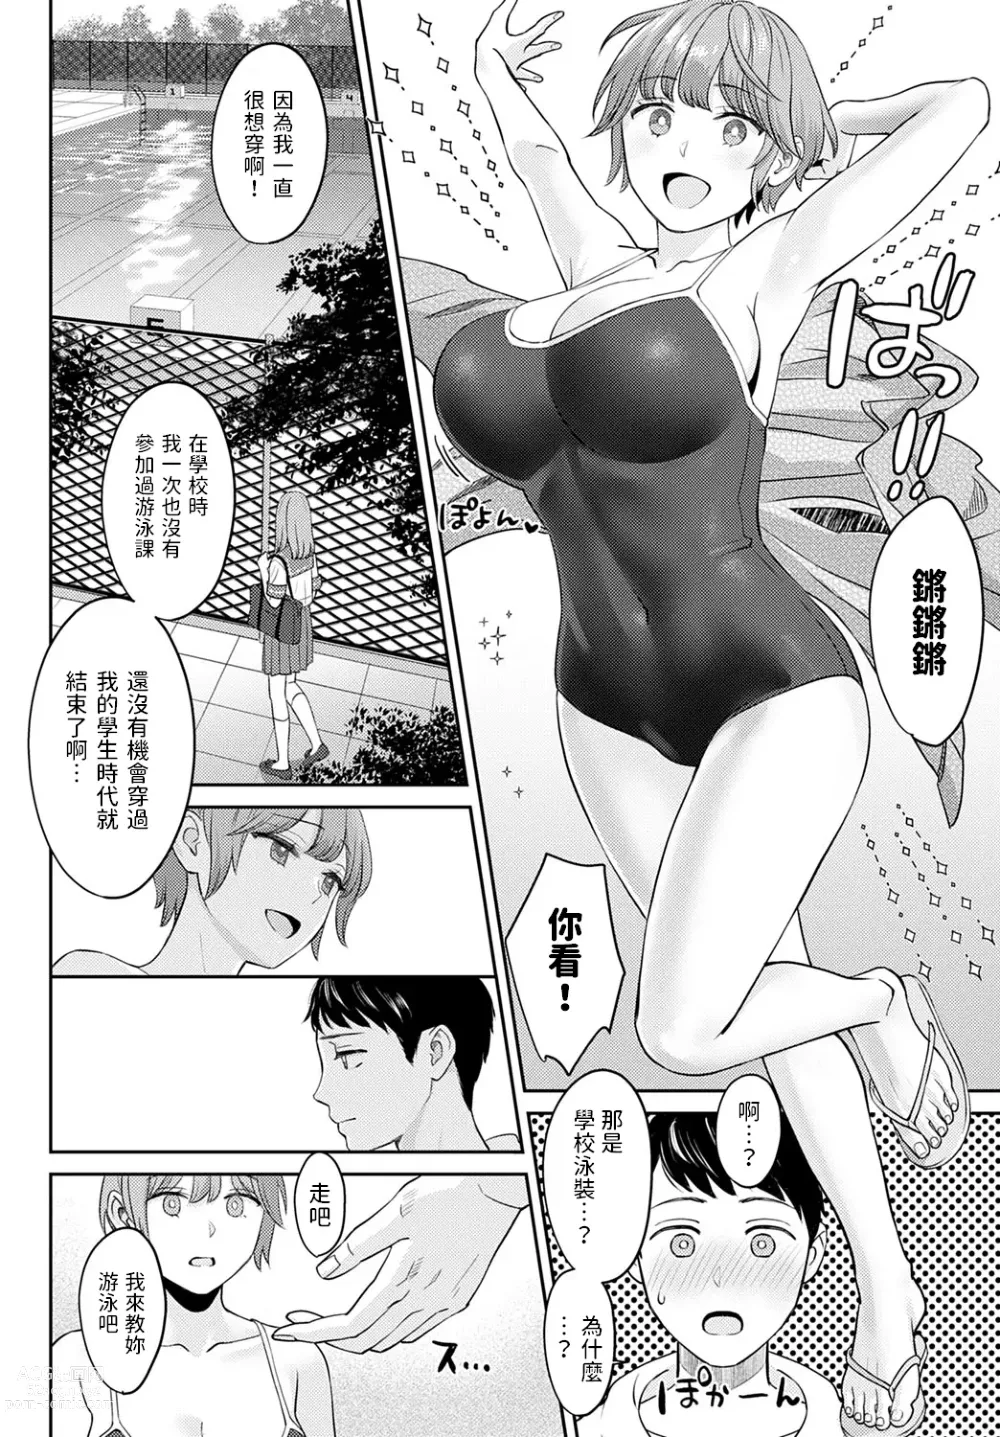 Page 6 of manga Saikai - reunion + restart